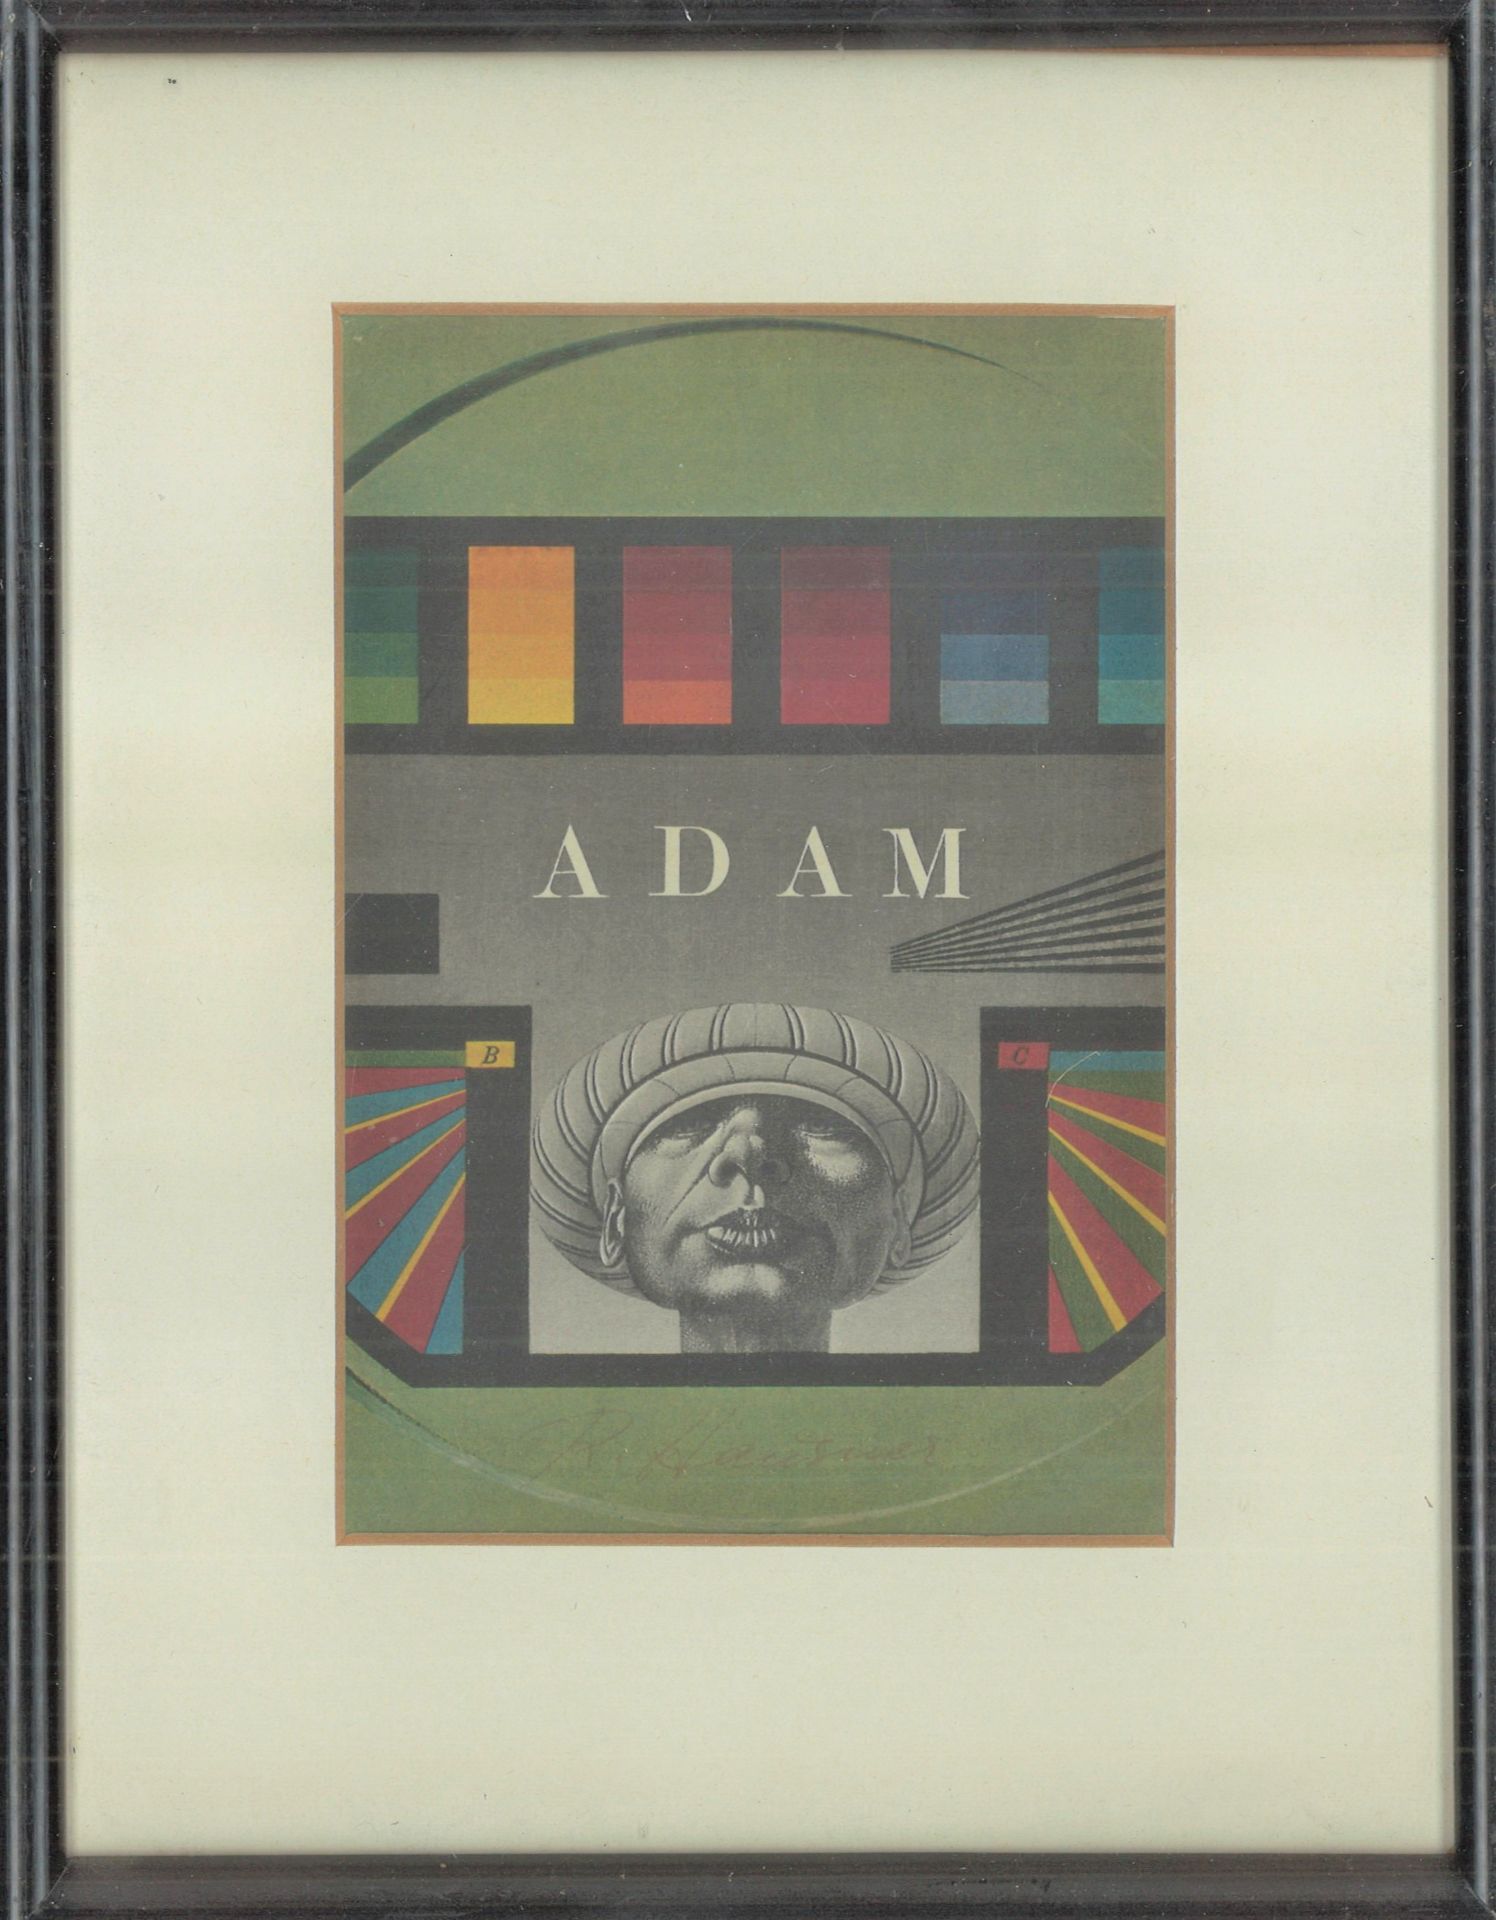 Druckgrafik R. Hausner "Adam", hinter Glas gerahmt. Gesamtmaße: Höhe ca. 26 cm, Breite ca. 20 cm